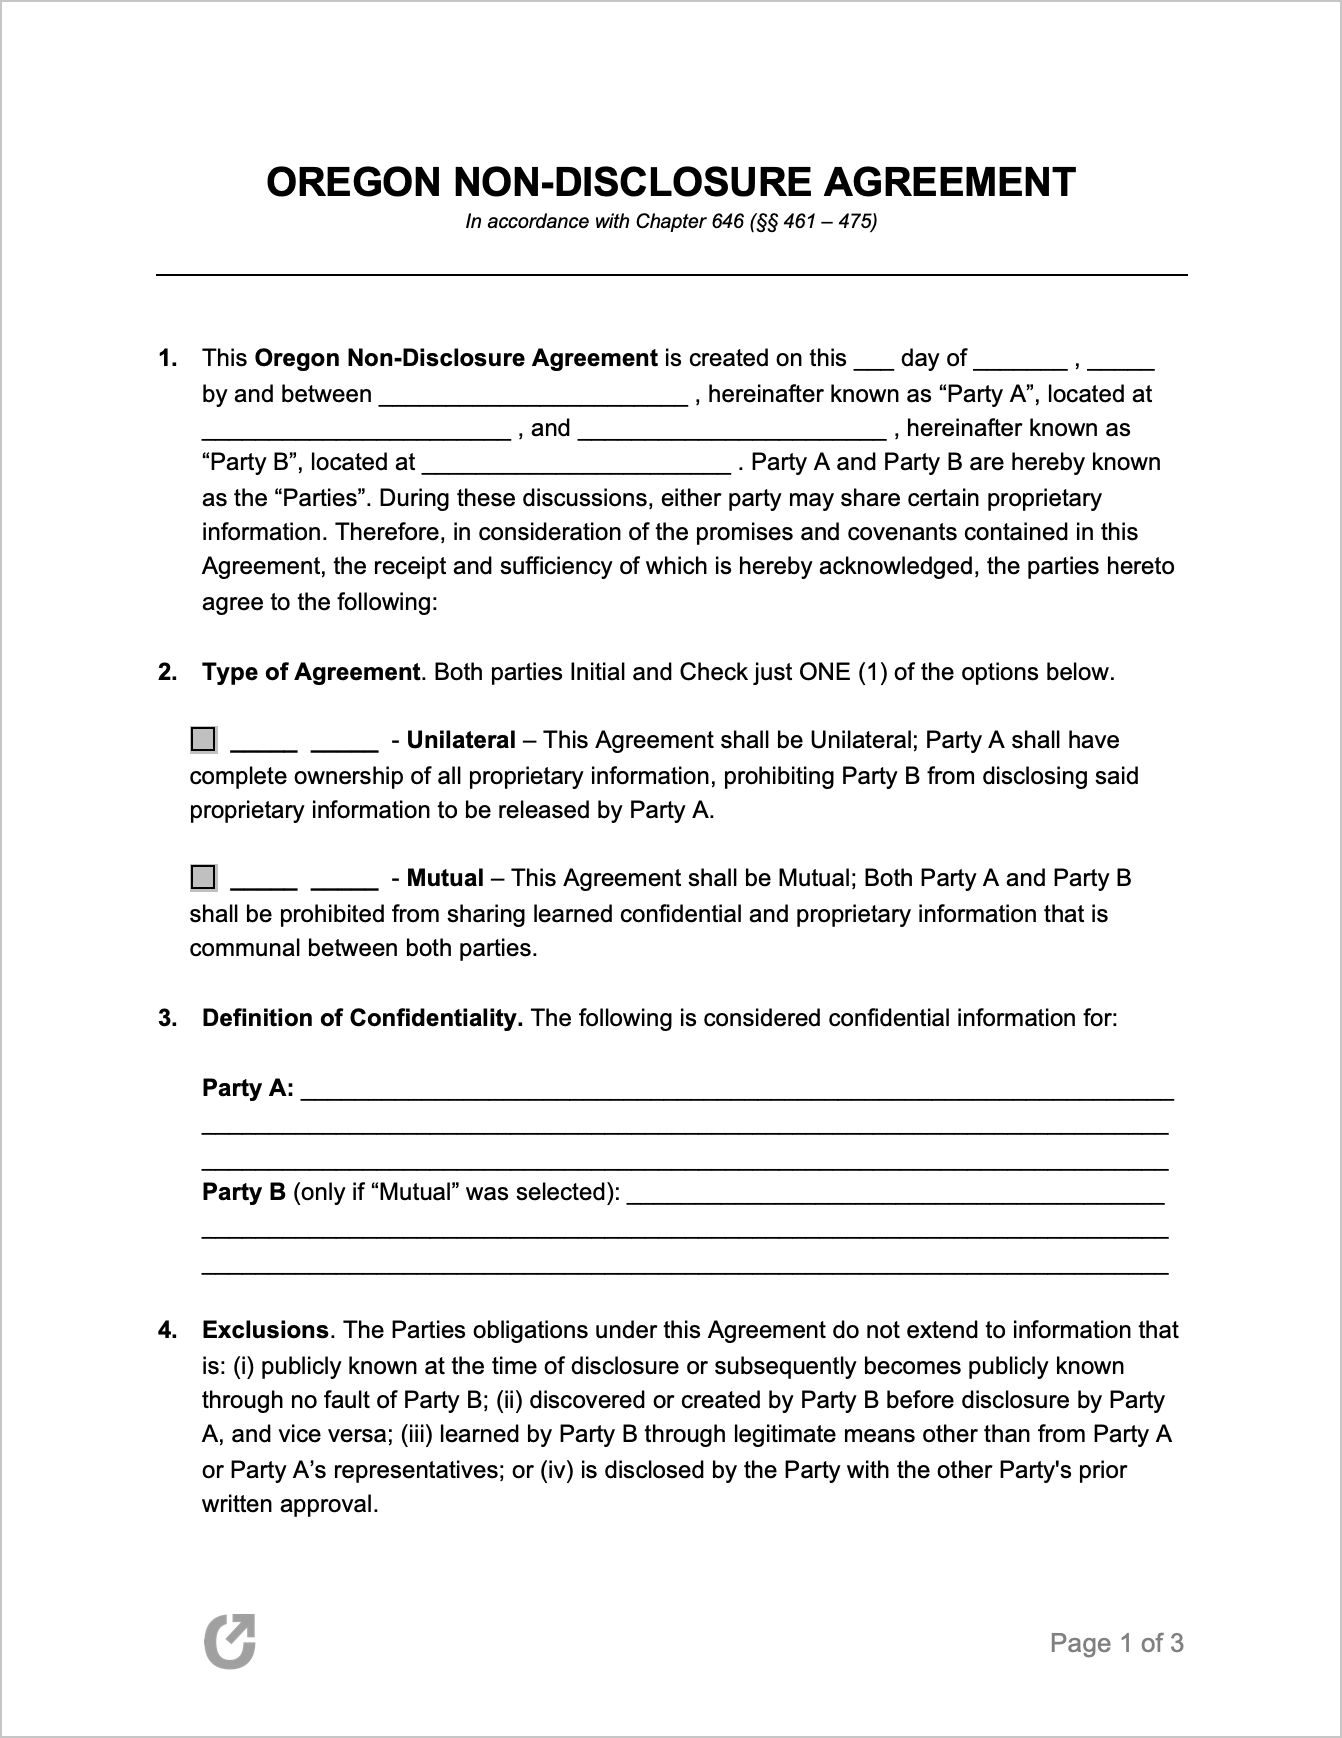 Free Oregon Non-Disclosure Agreement Template  PDF  WORD With unilateral non disclosure agreement template